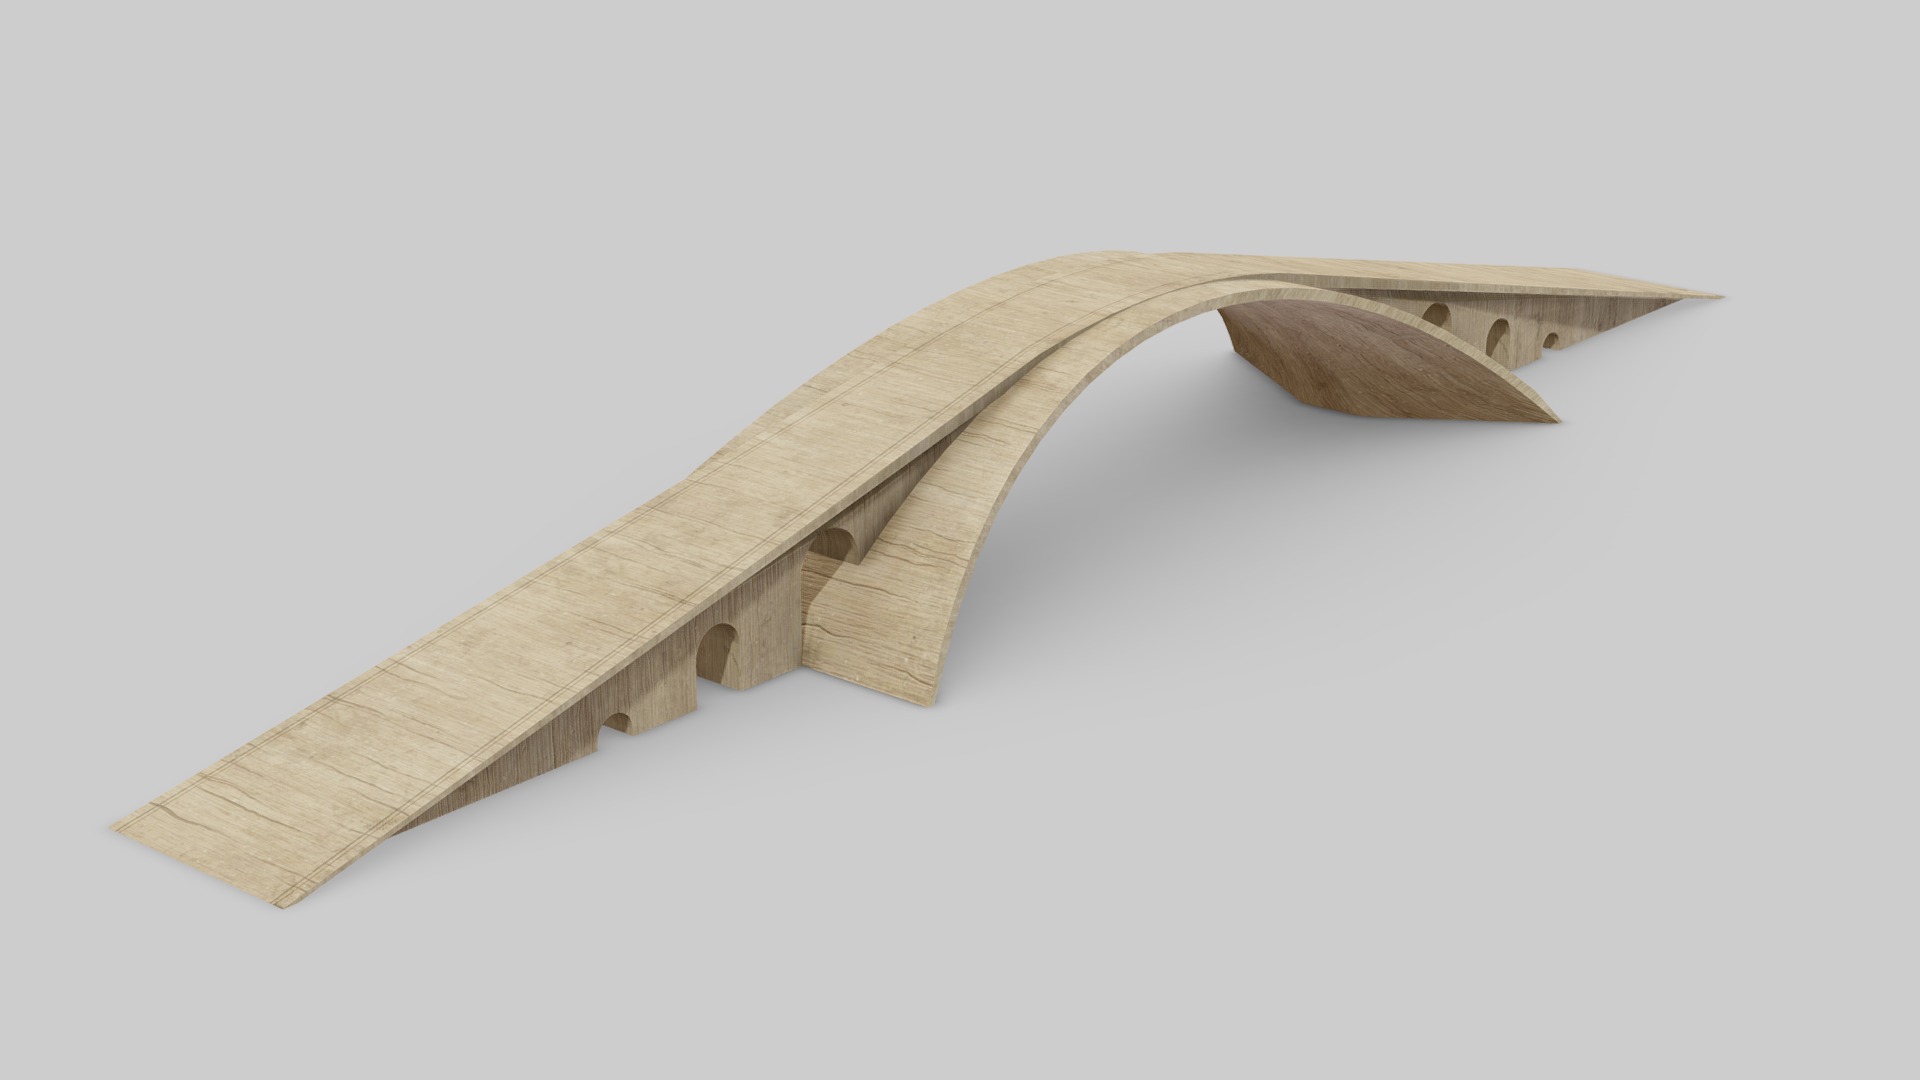 3D model Leonardo da Vinci – Ponte di legno - This is a 3D model of the Leonardo da Vinci - Ponte di legno. The 3D model is about a wooden axe on a white background.